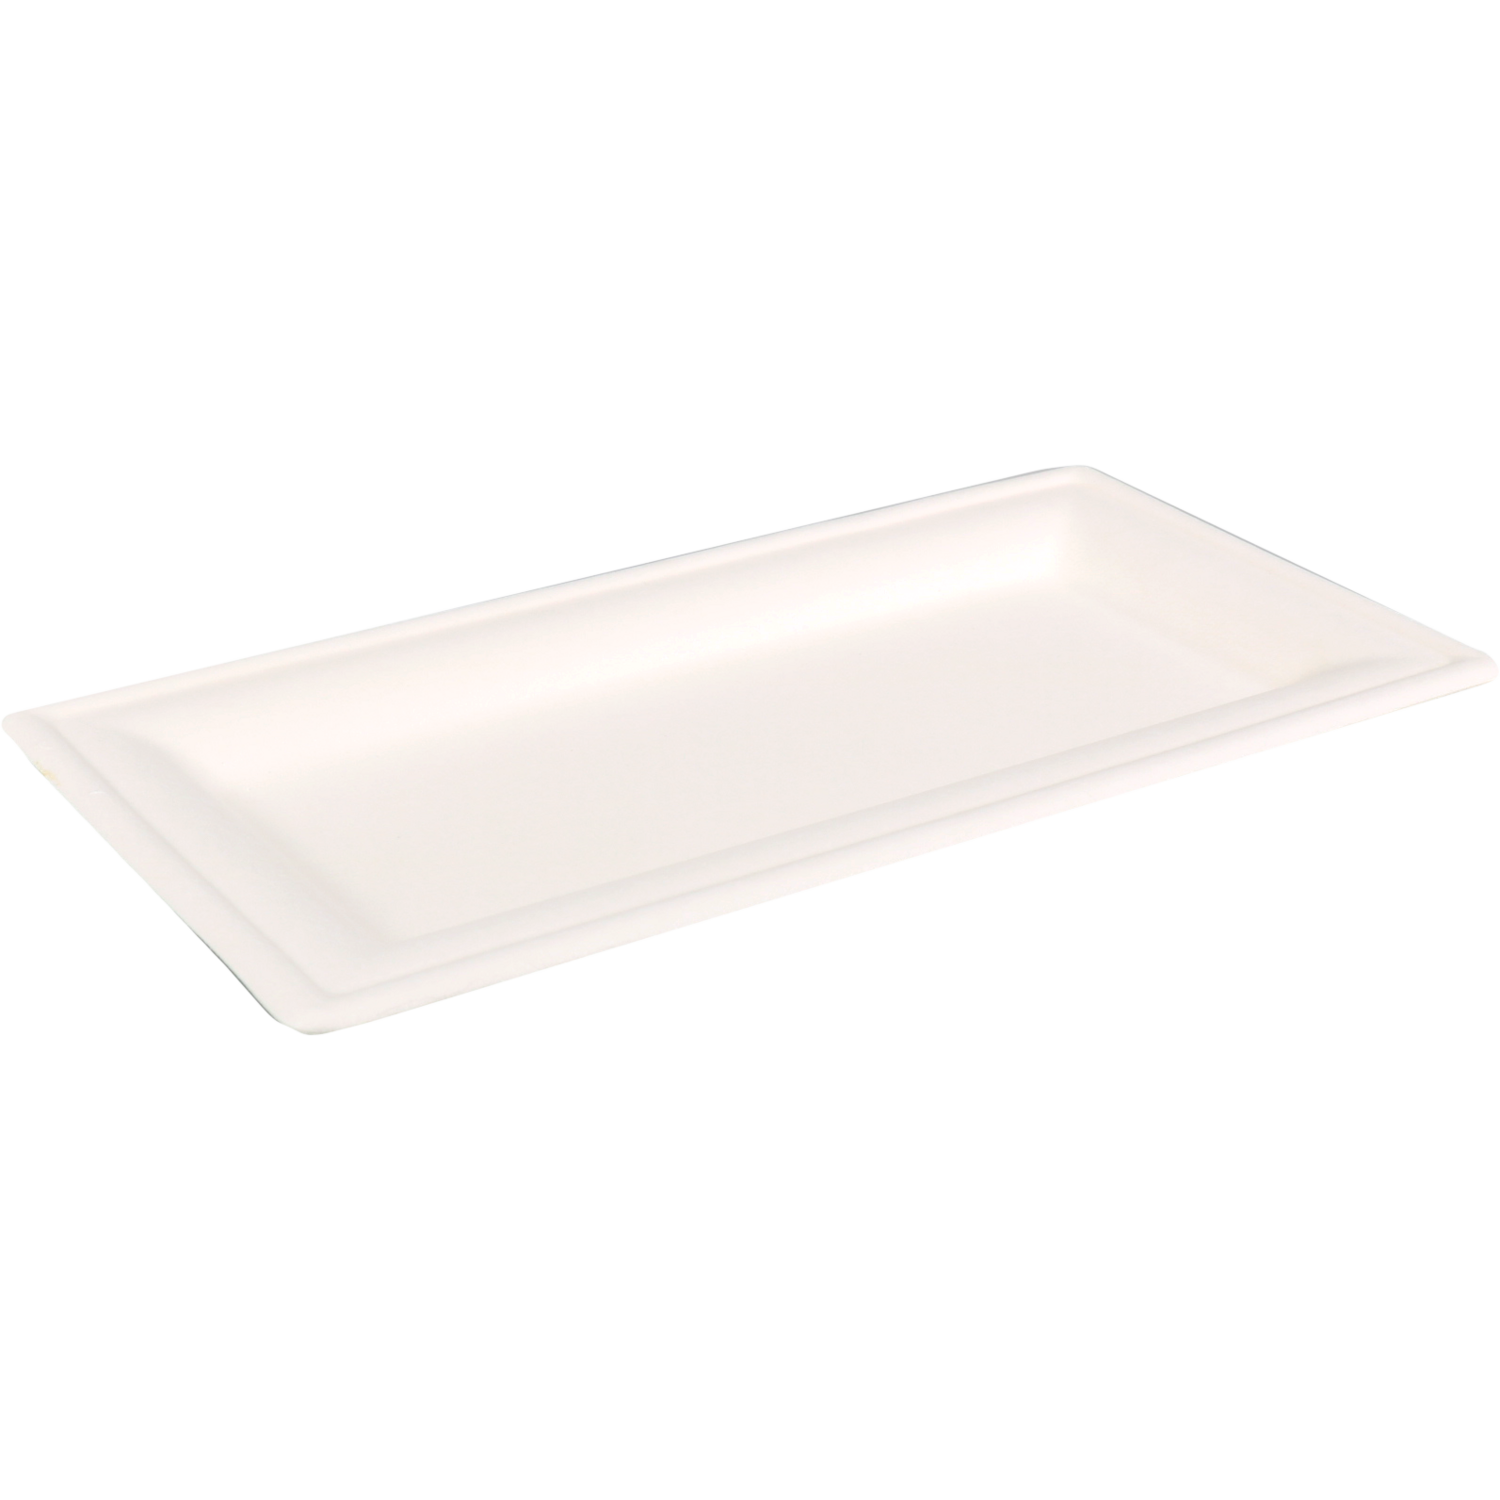 Biodore® Plate, rectangular, 1 compartment, bagasse, 26x13cm, white 1